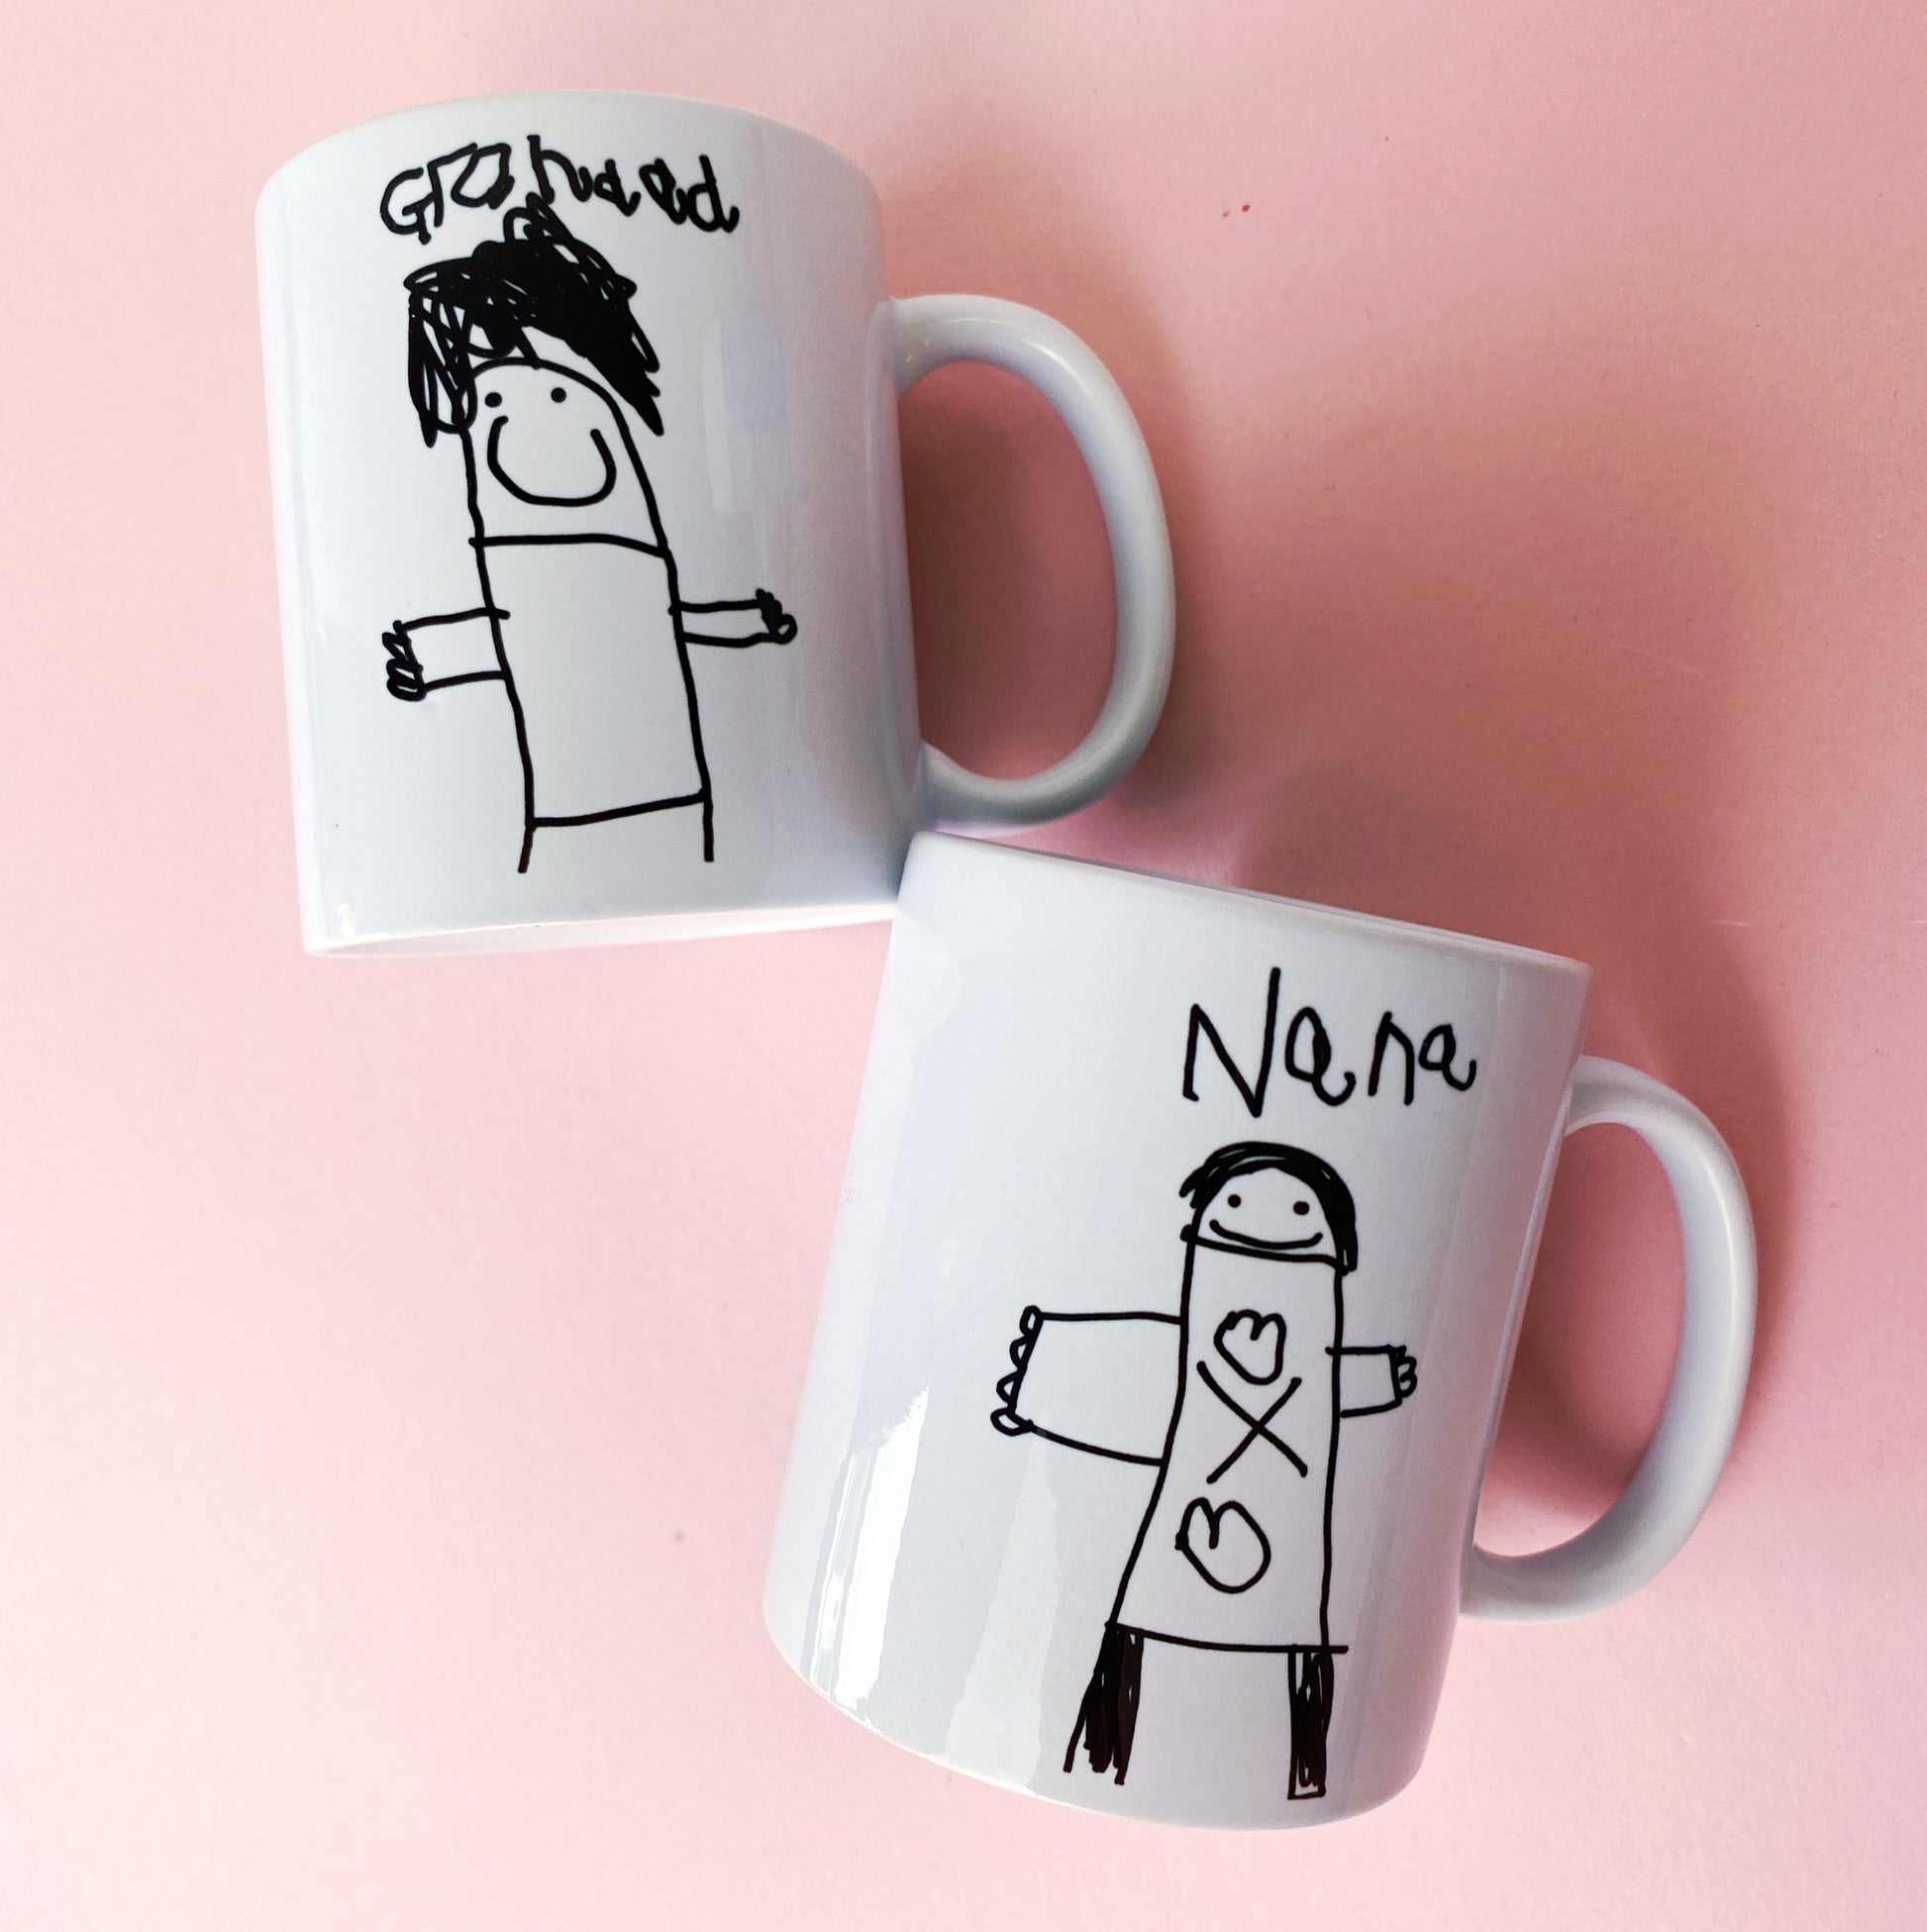 nana and grandad mugs